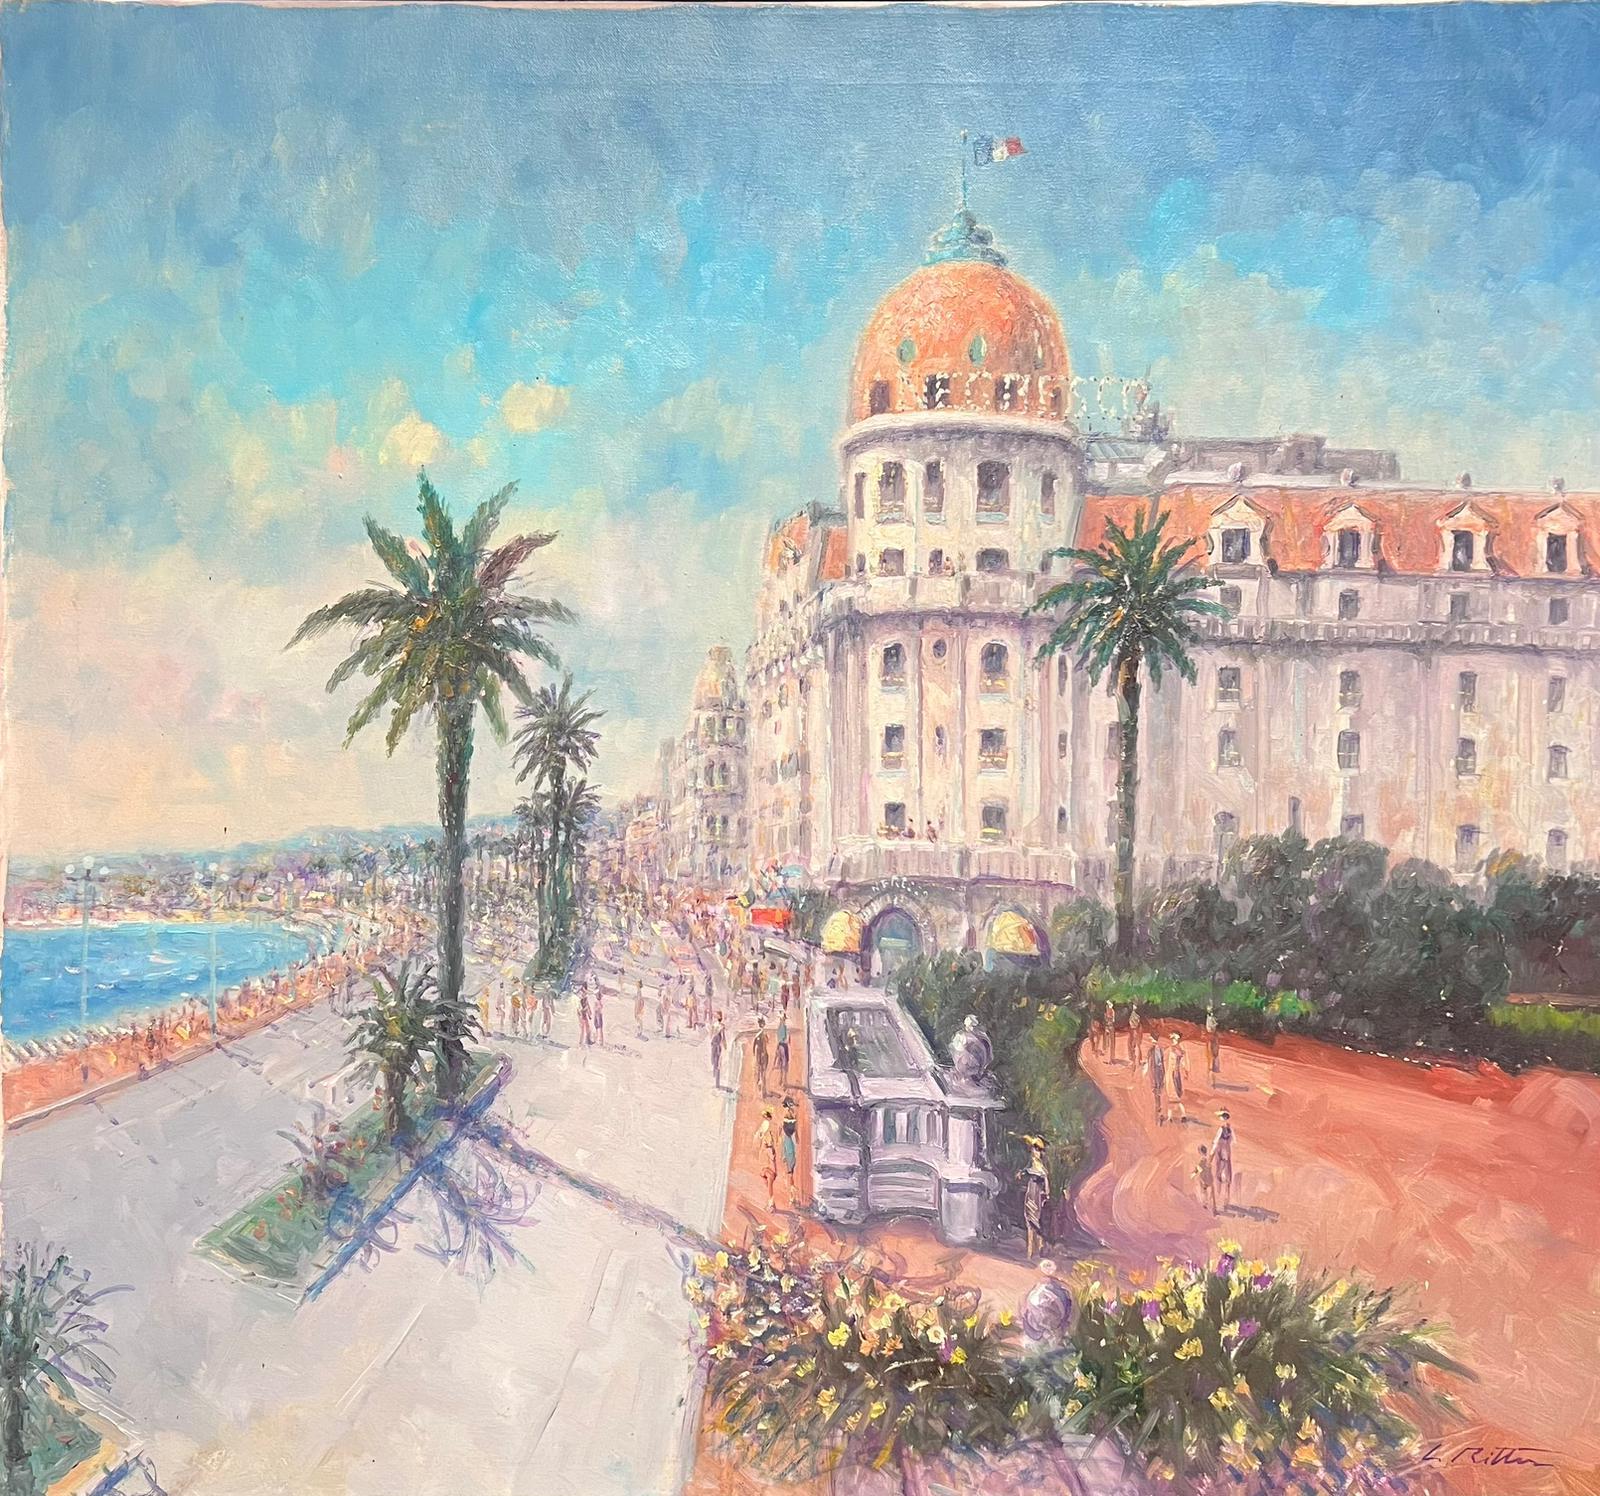 Laszlo Ritter Landscape Painting - The Negresco Note Nice Promenade des Anglais Large Impressionist Oil Painting